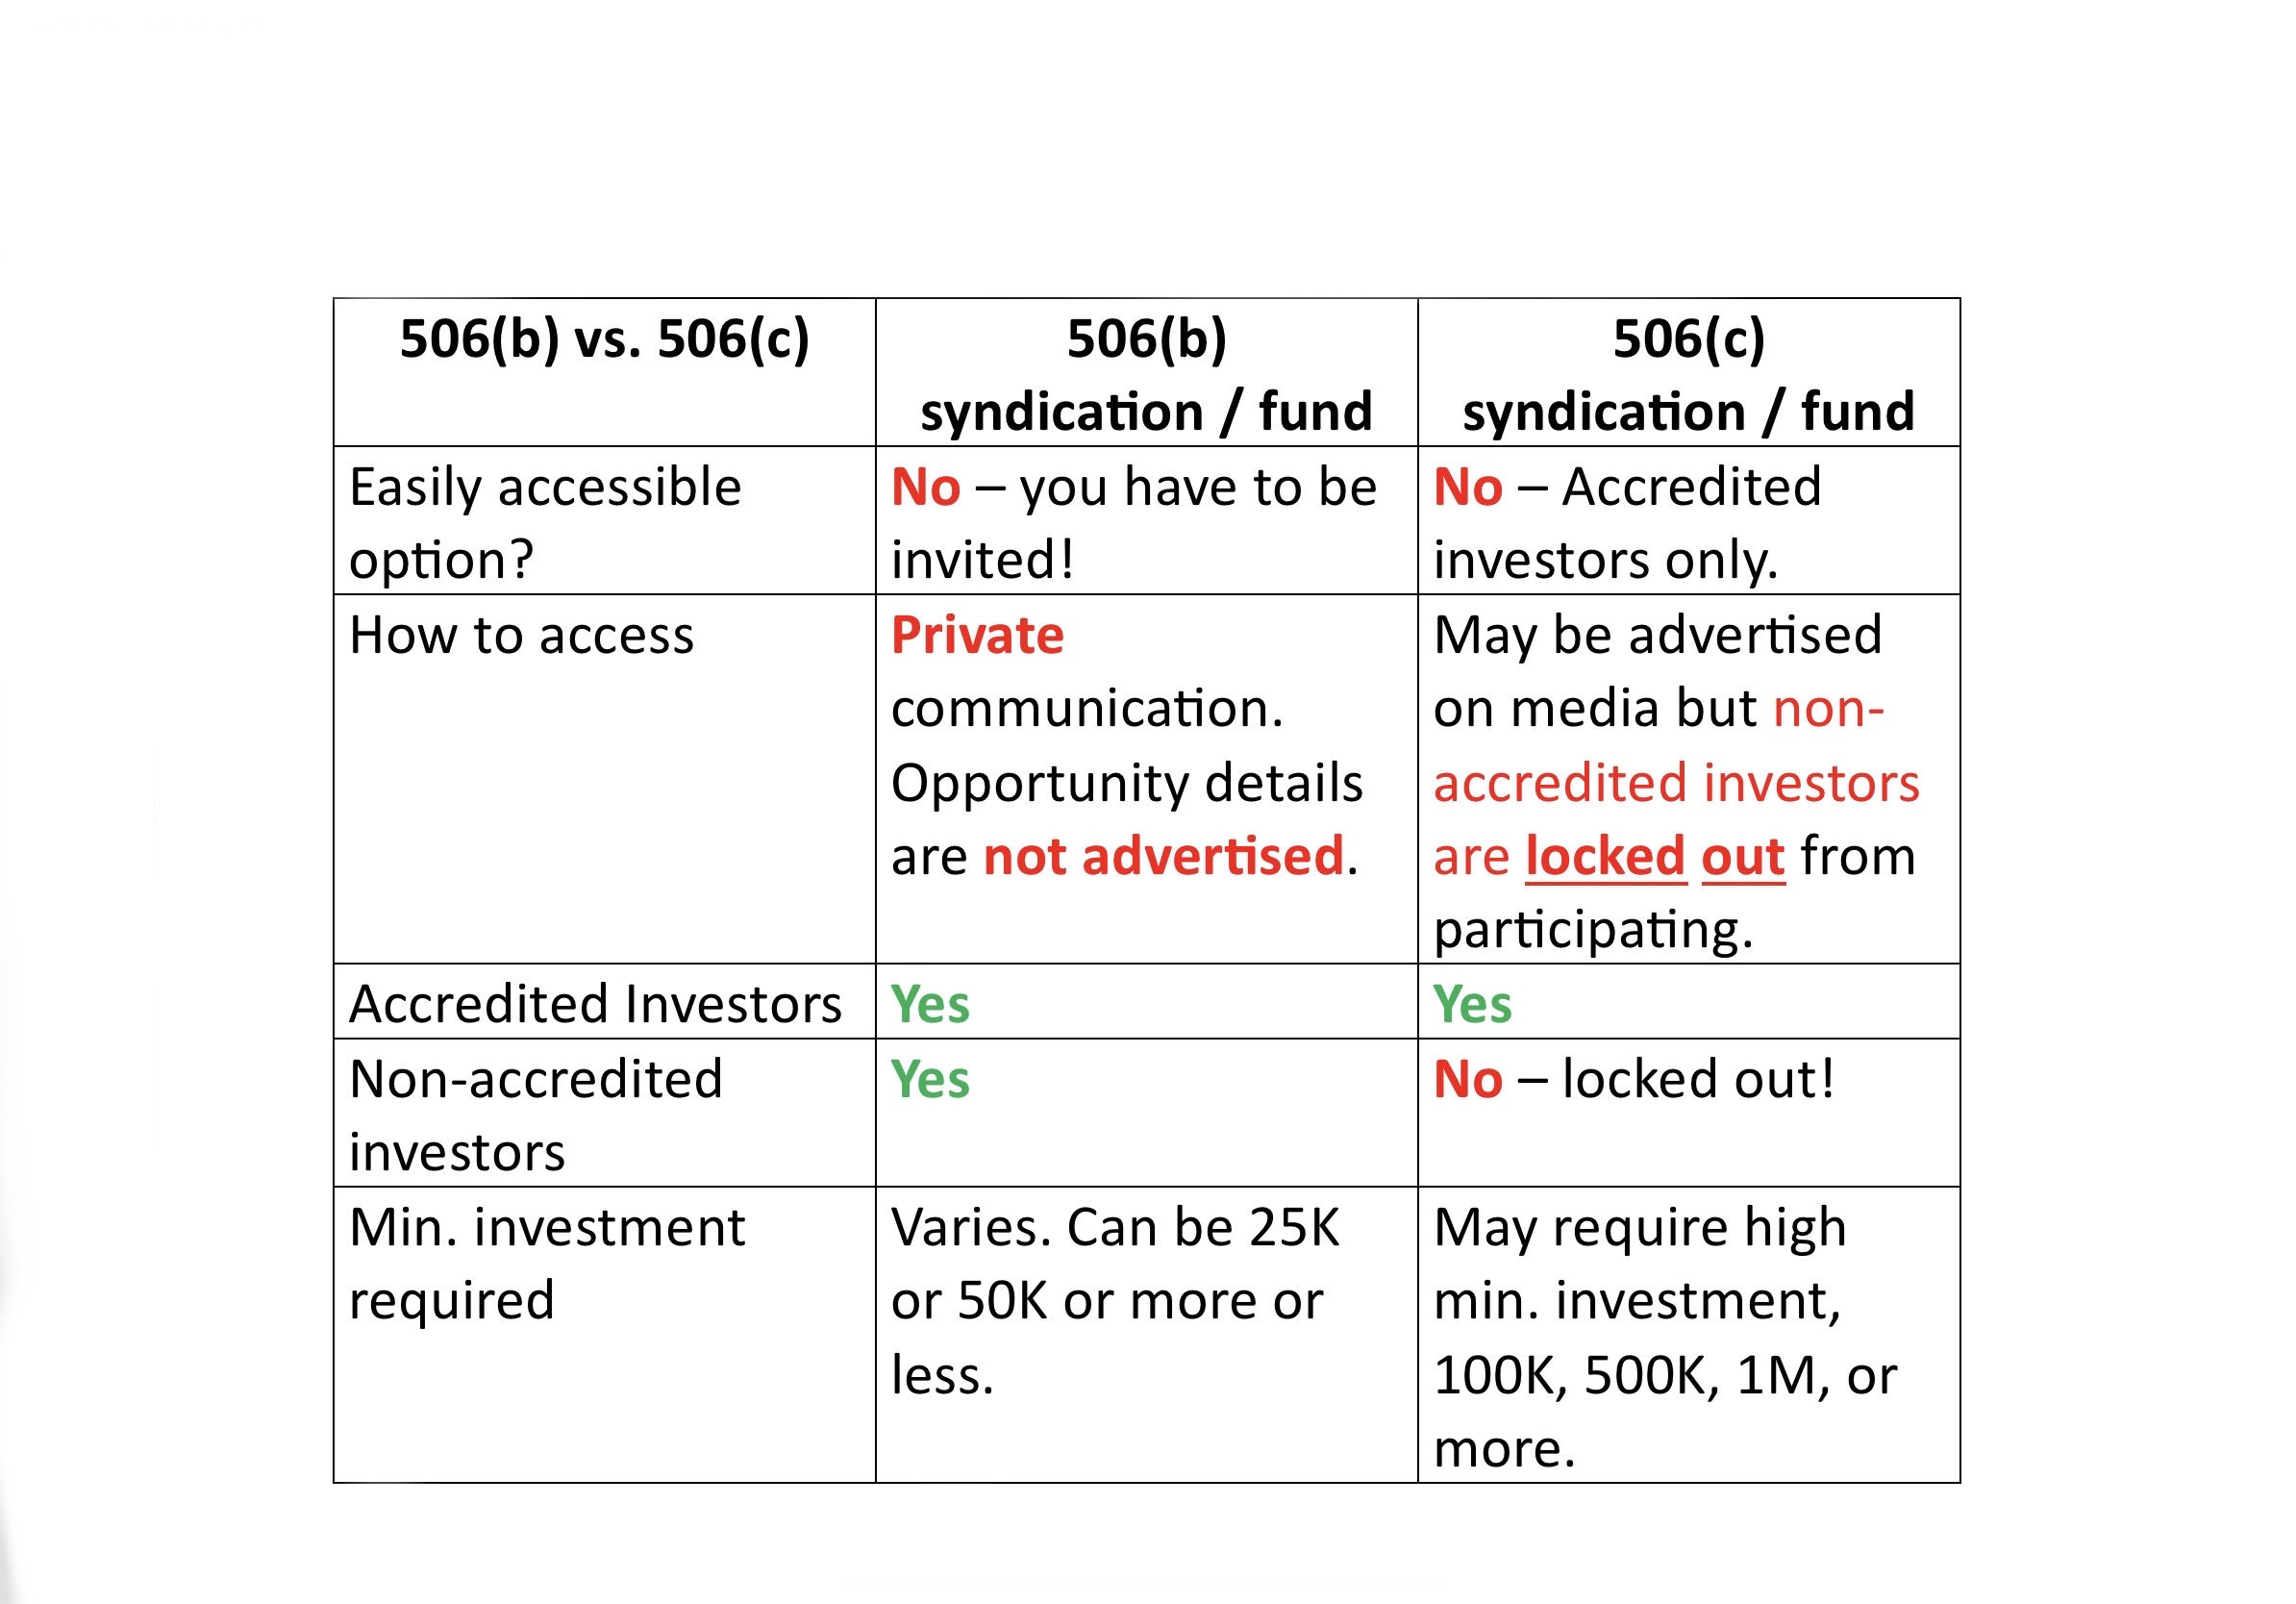 Investment Code 506(b) vs 506(c) #alphadog